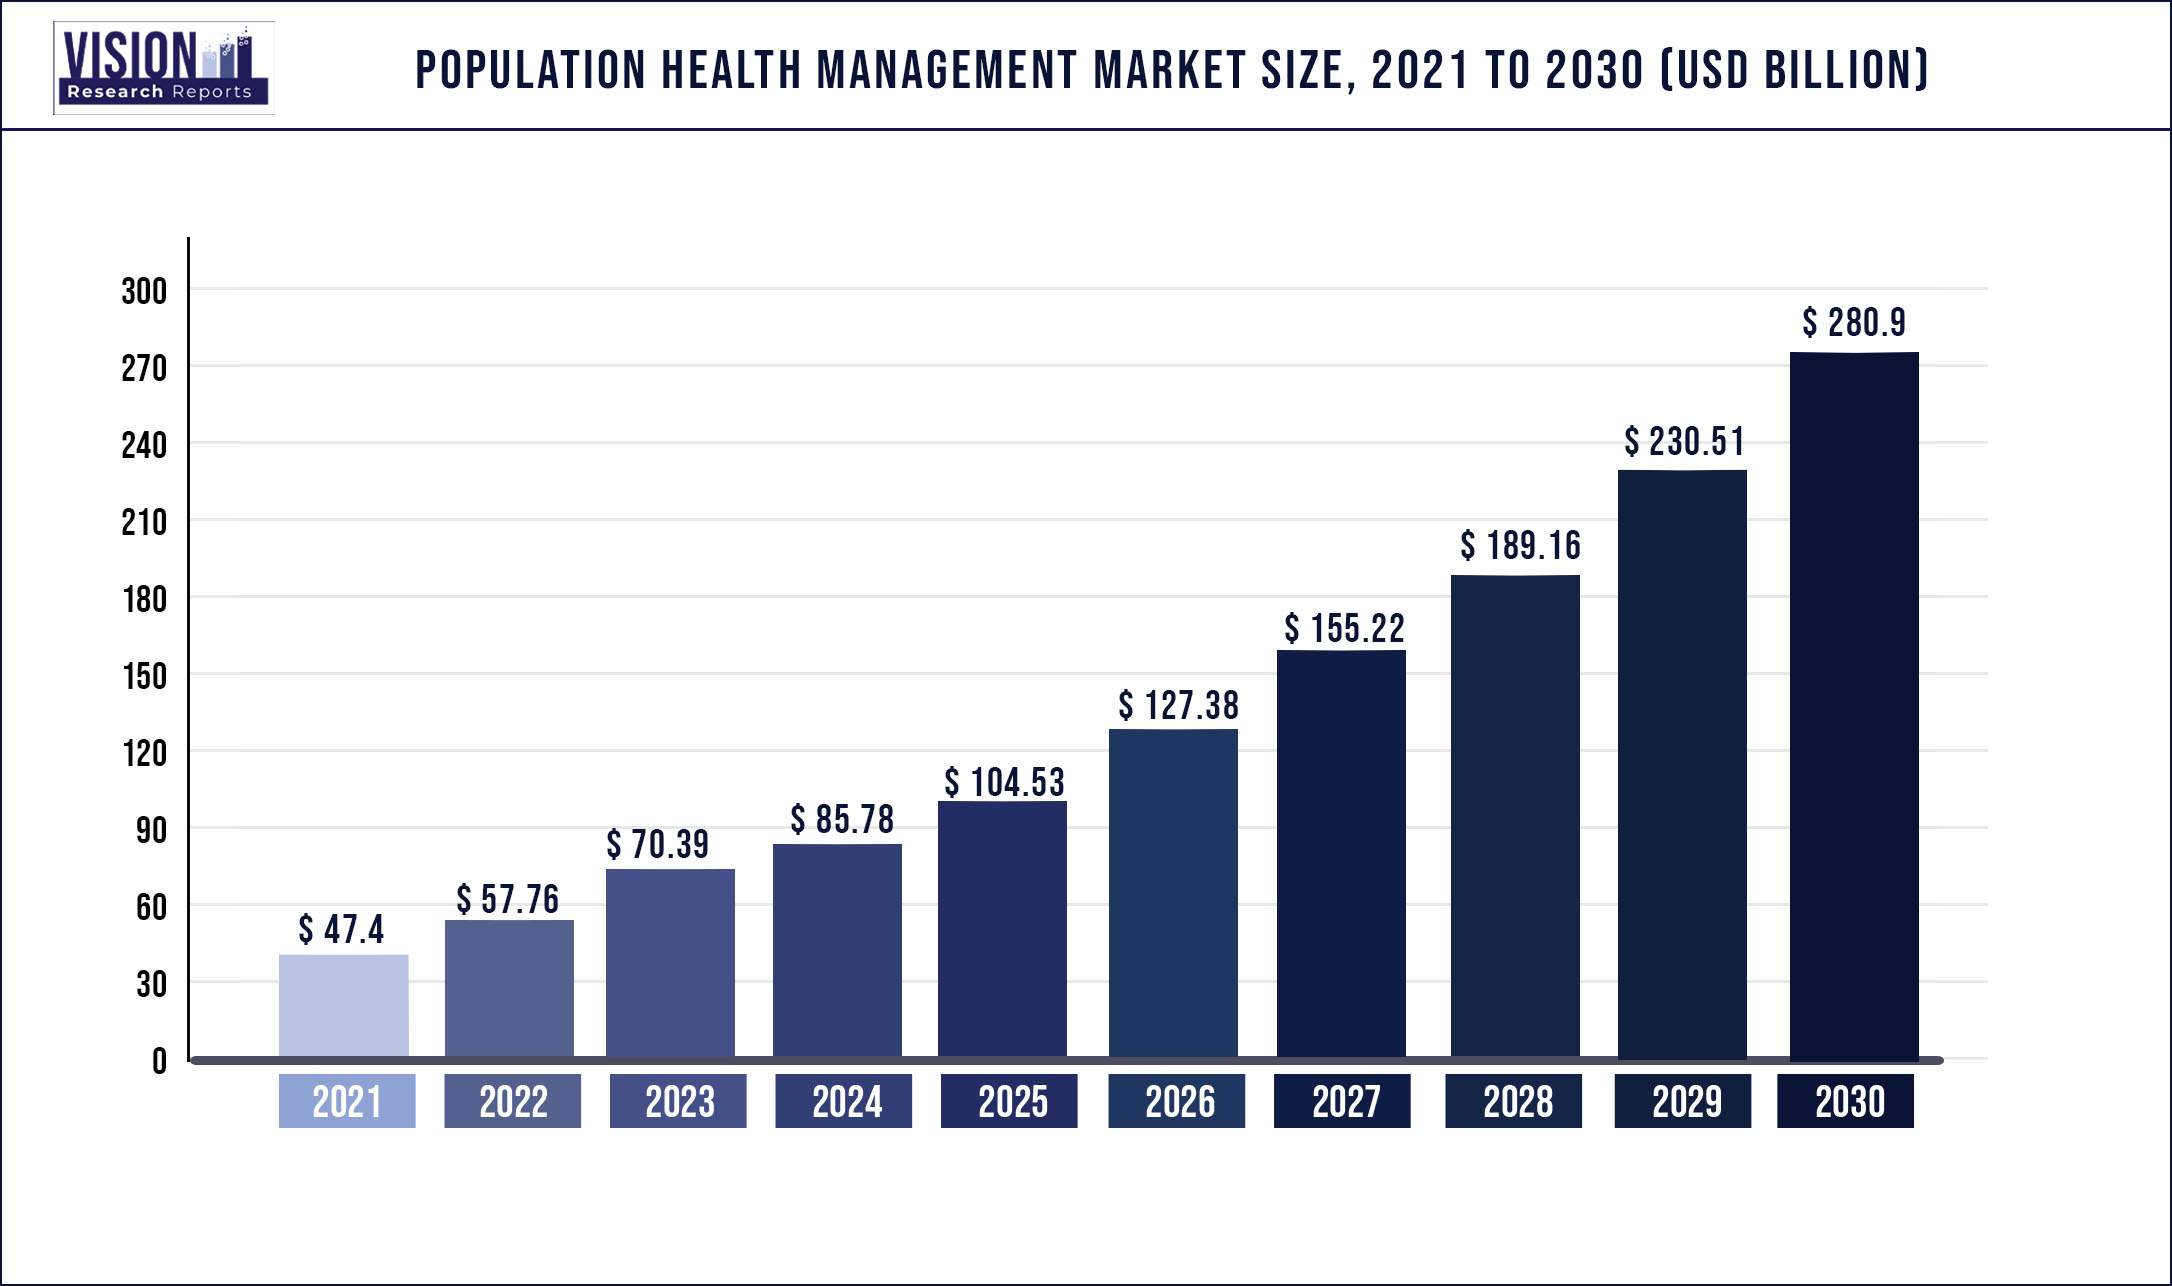 Population Health Management Market Size 2021 to 2030